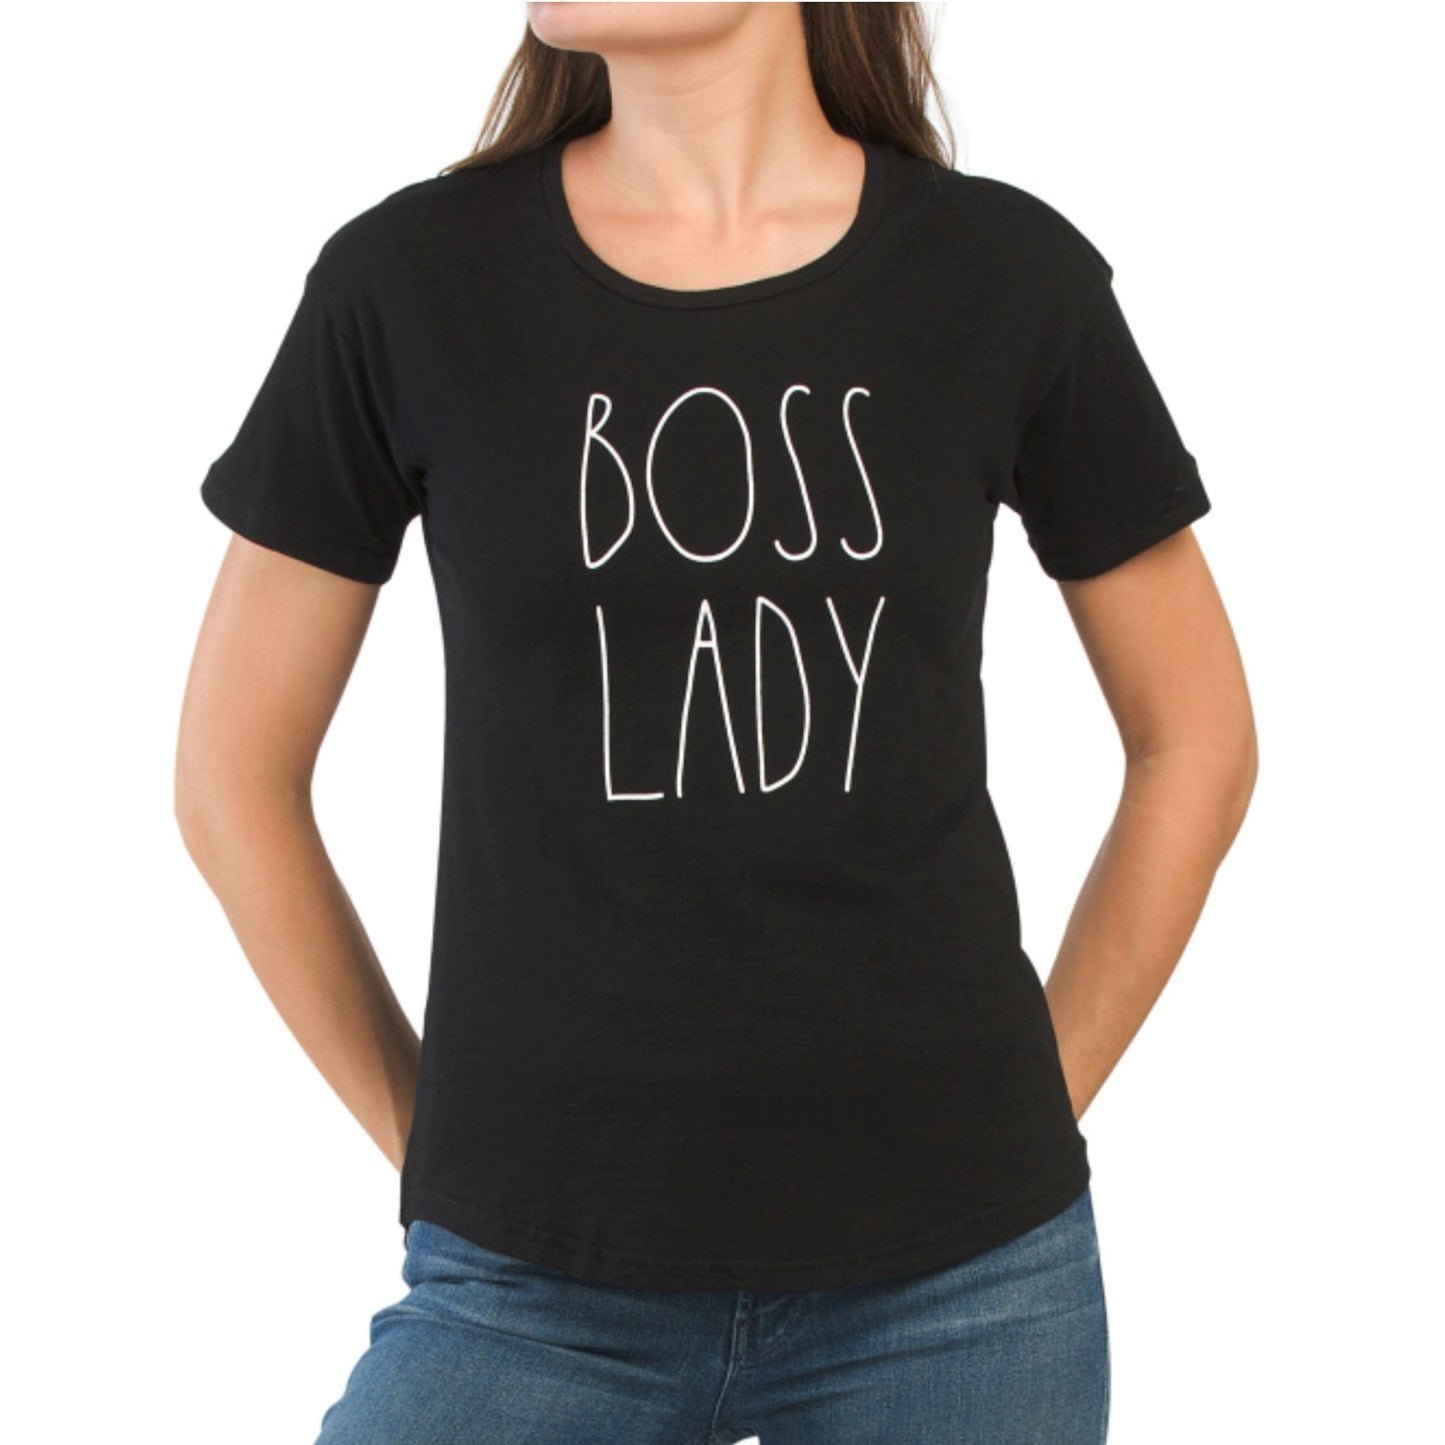 Rae Dunn Boss Lady Cotton T-Shirt